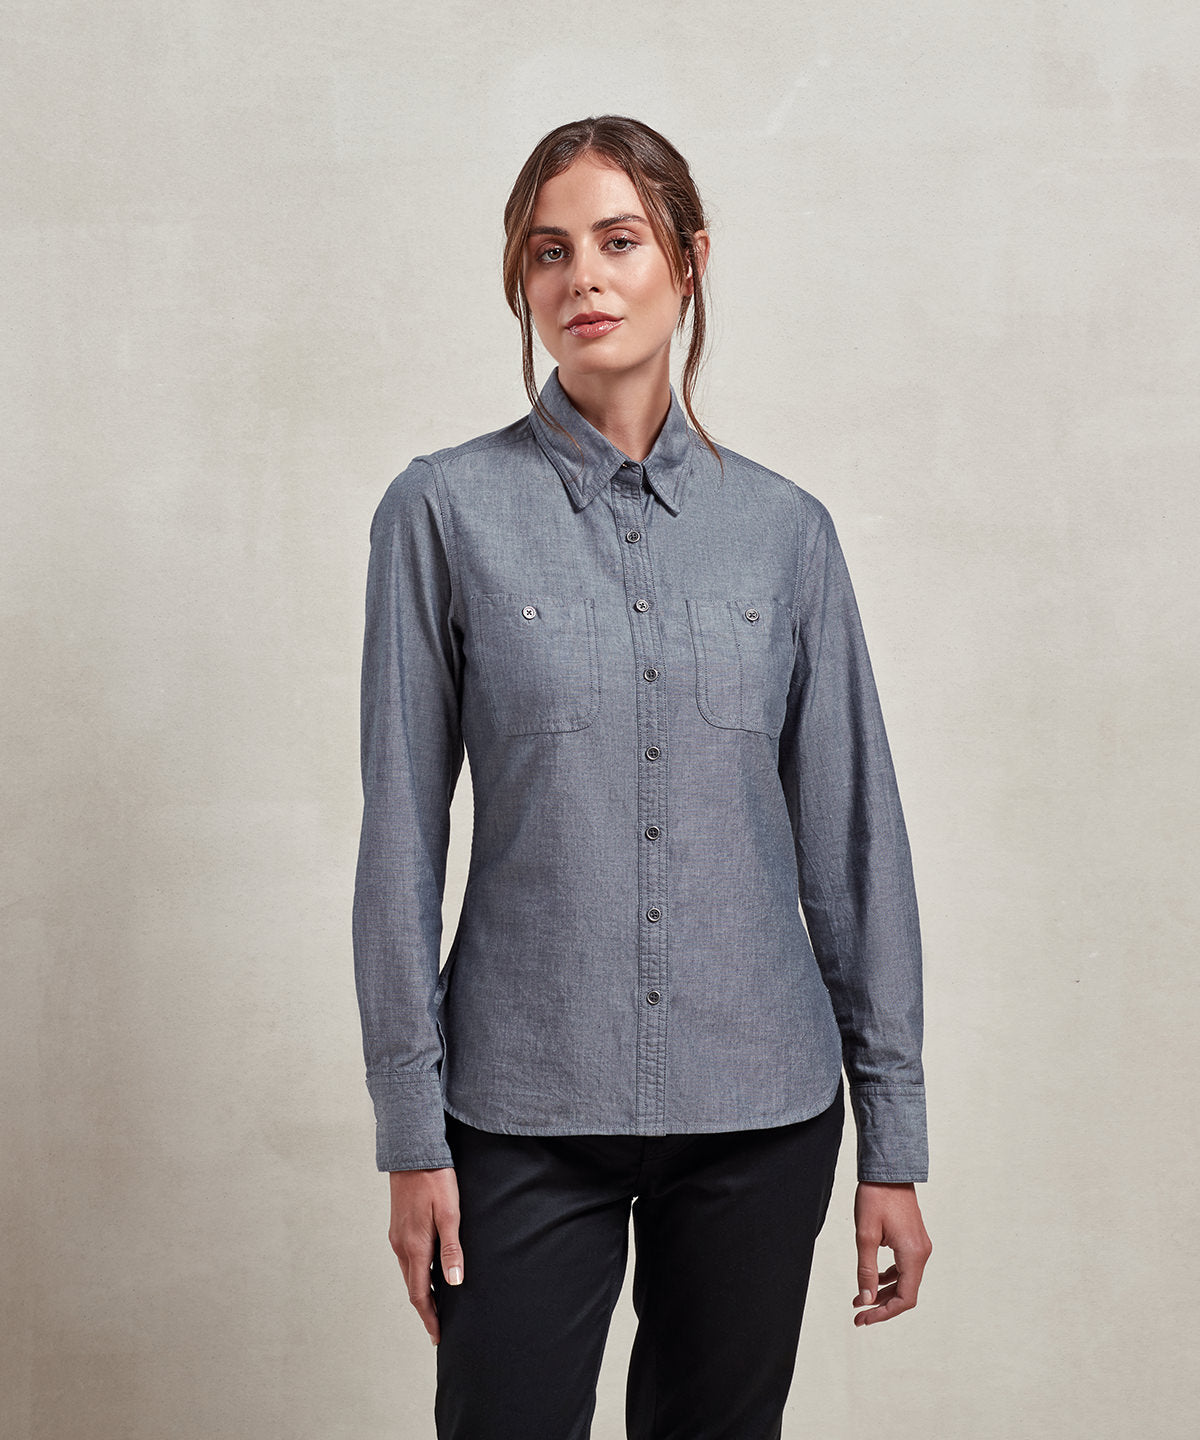 Womenâ€™s Chambray shirt, organic and Fairtrade certified